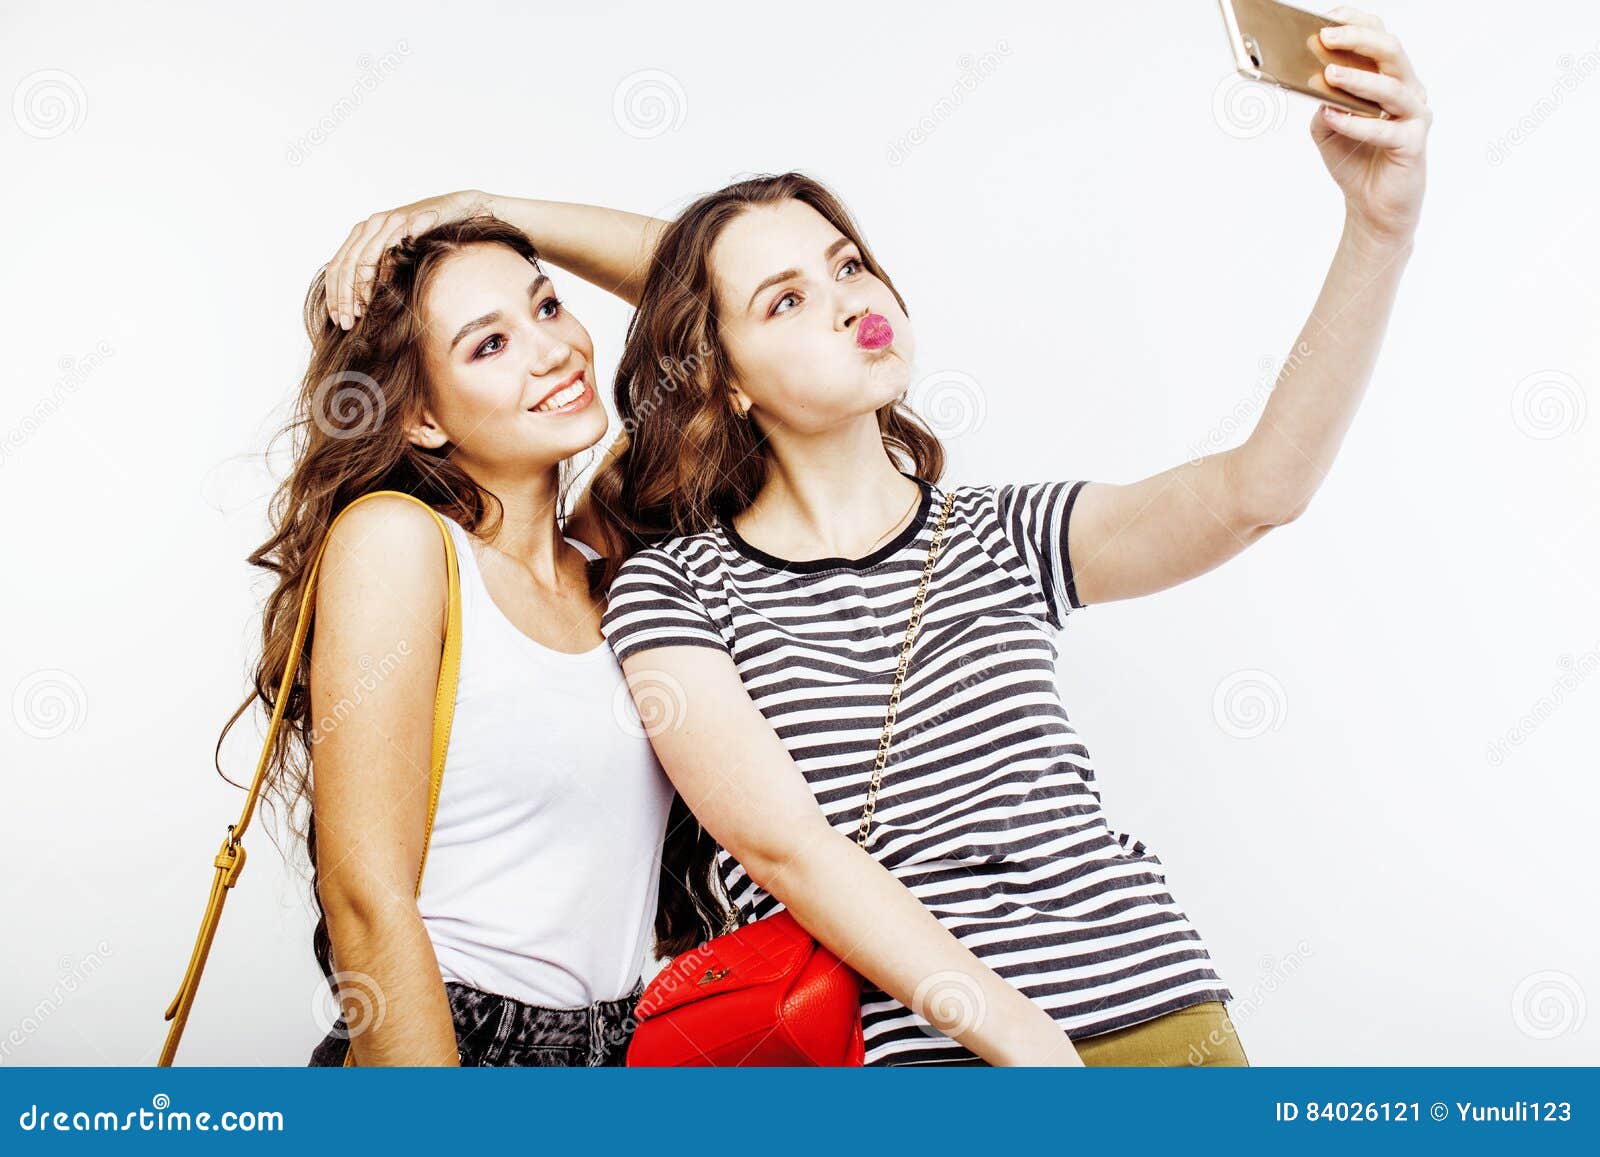 Two Best Friends Teenage Girls Together Having Fun, Posing ...